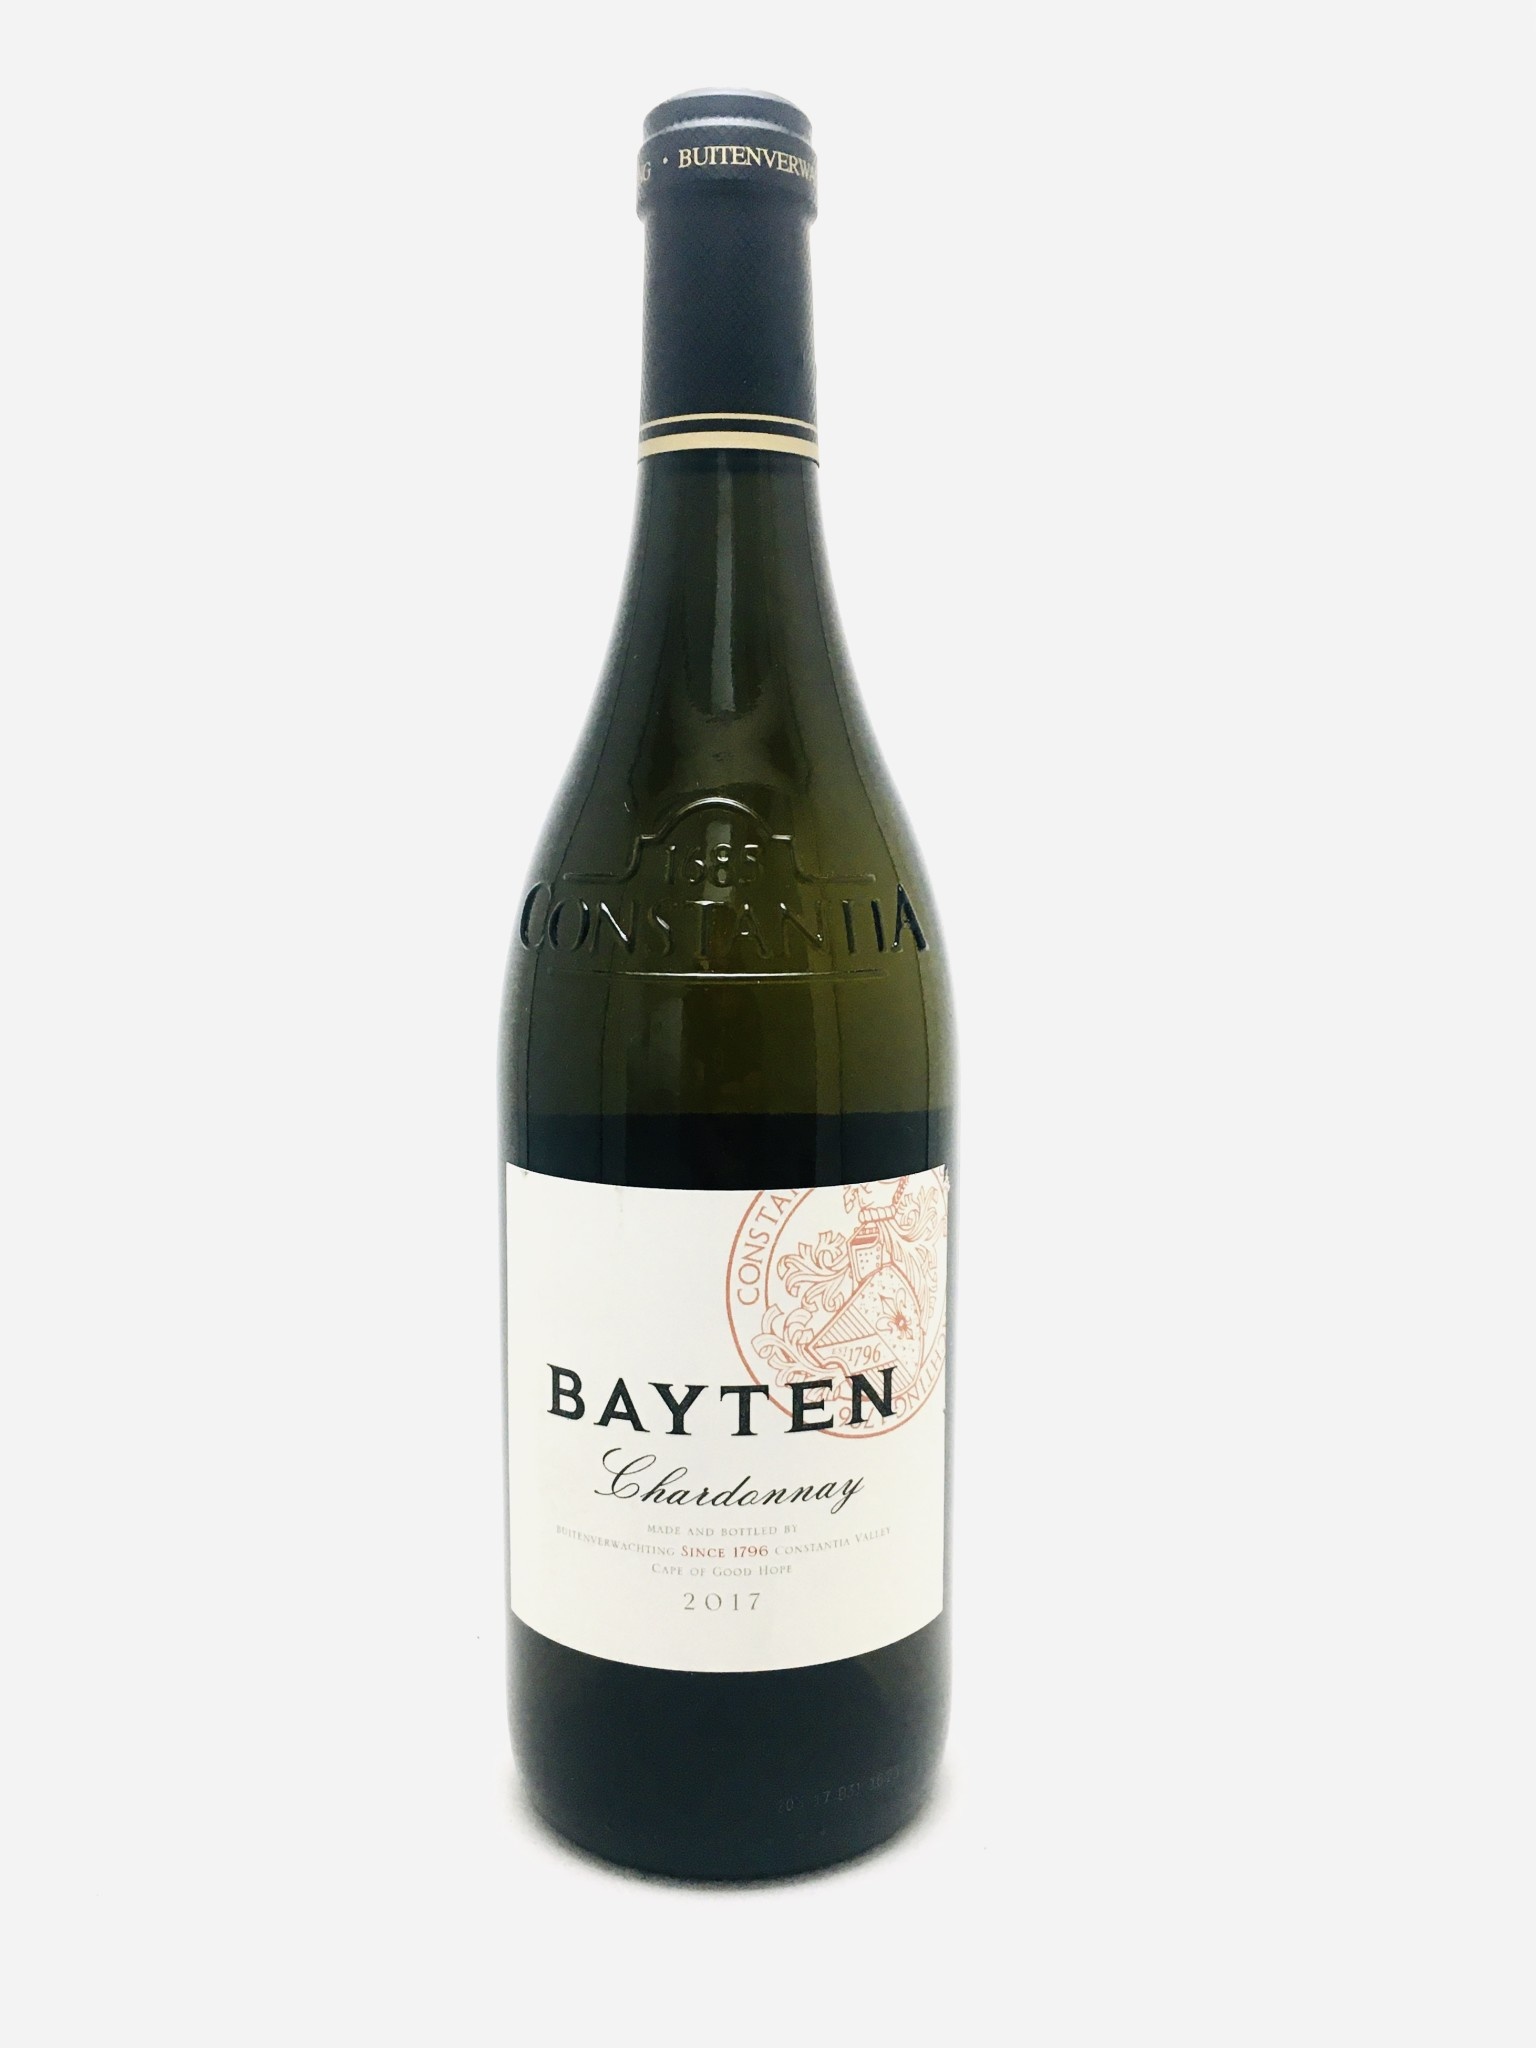 Bayten Chardonnay Constantia South Africa 2018